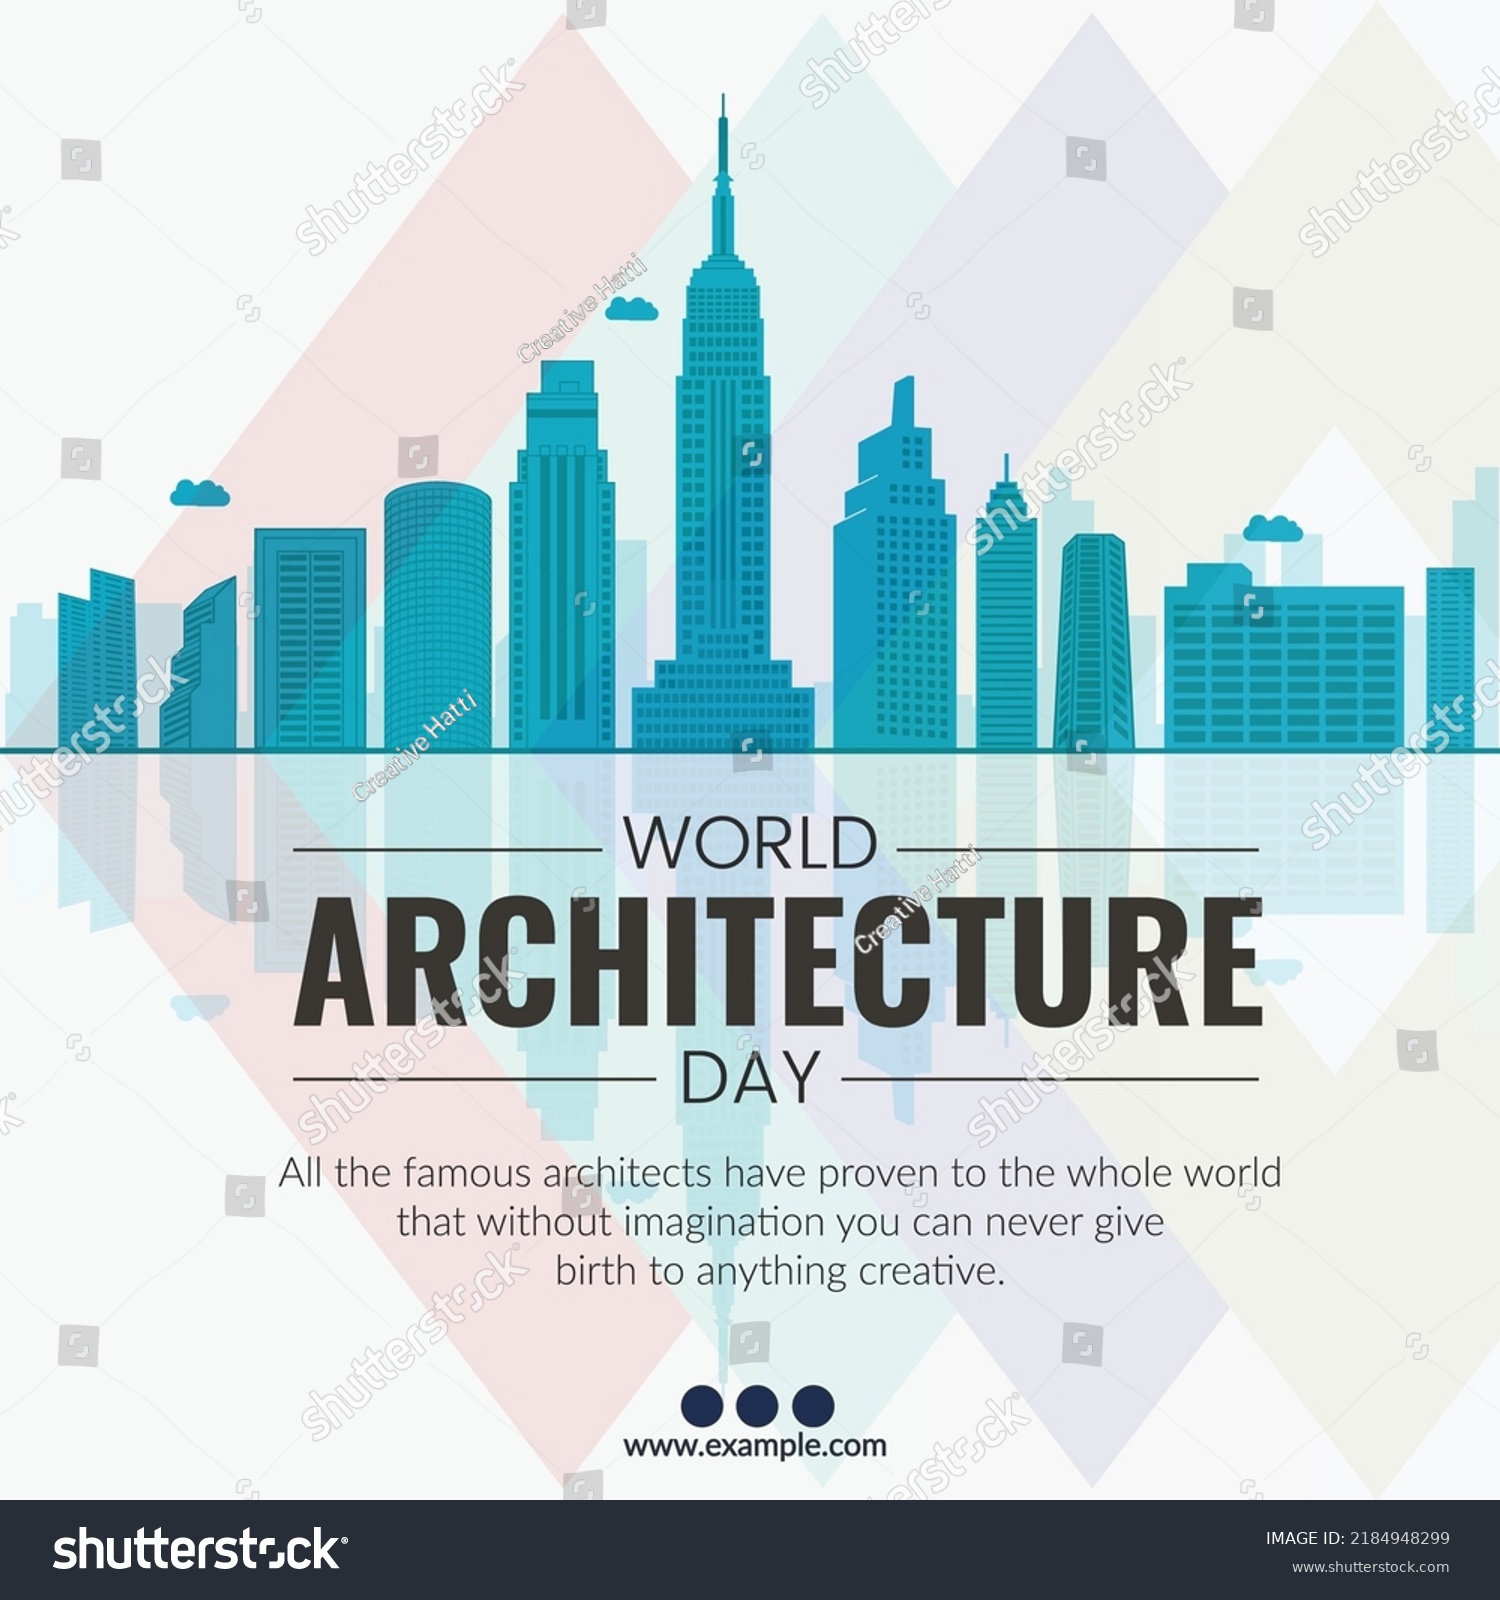 stock-vector-world-architecture-day-banner-design-template-2184948299.jpg